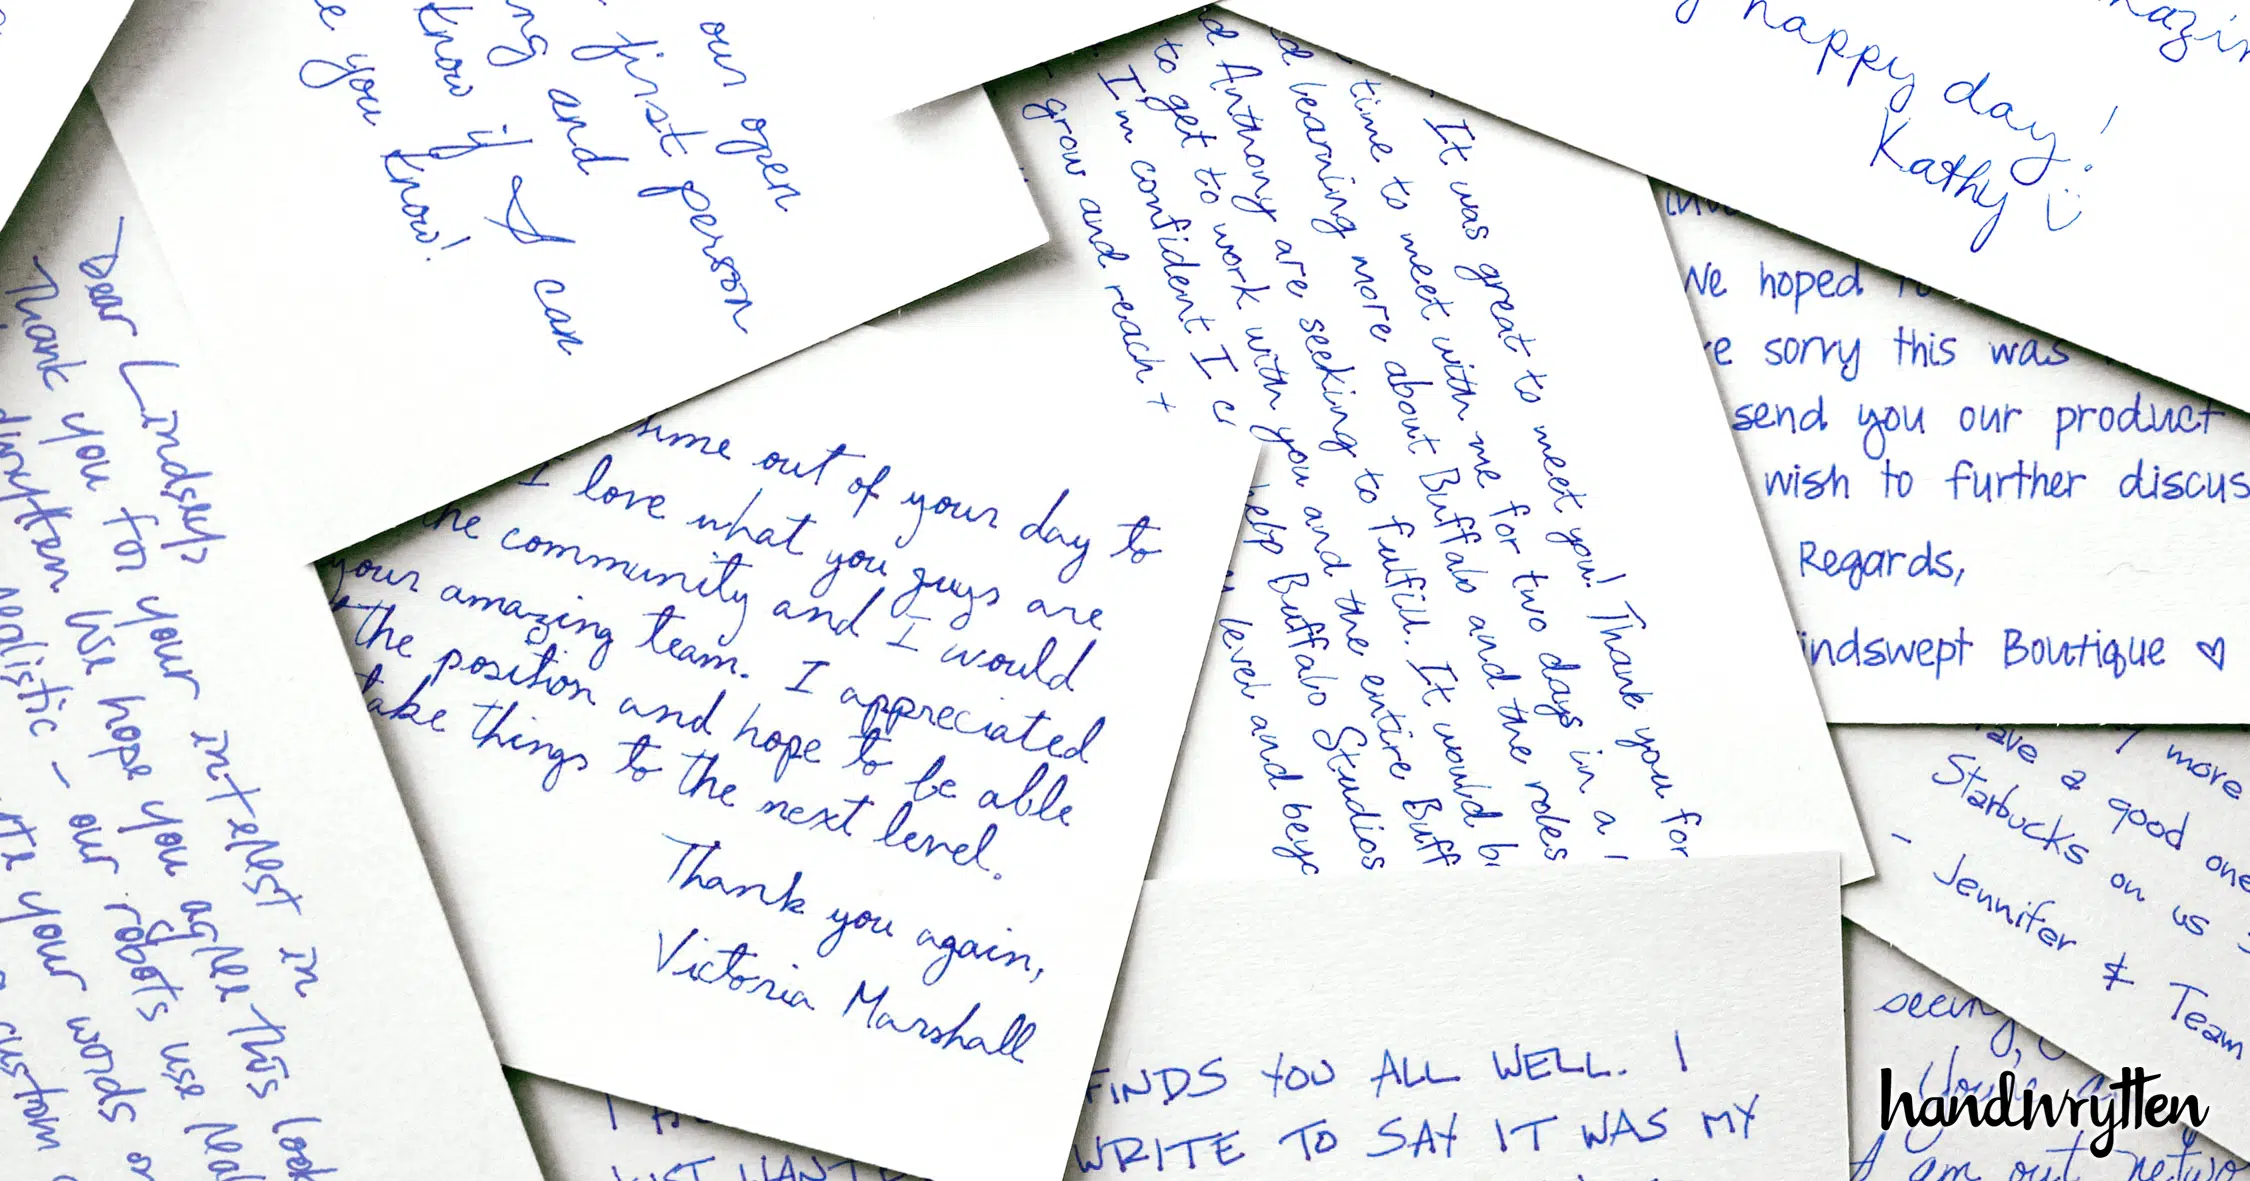 pile of handwritten notes with Handwrytten in bottom right